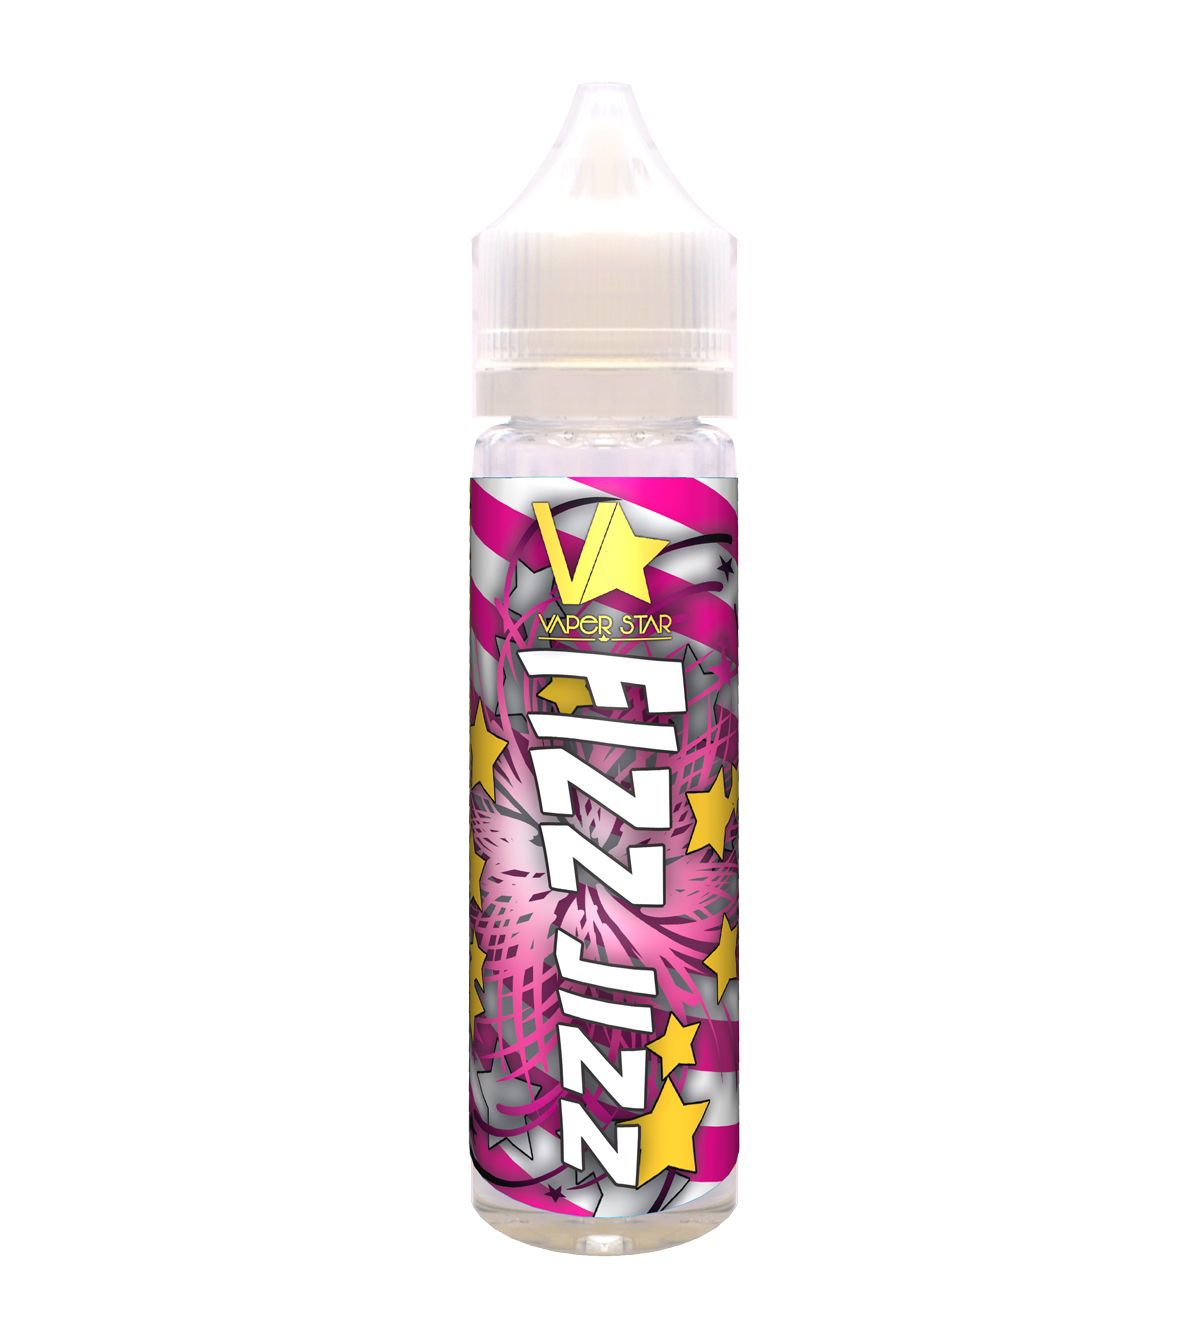 Jizz Juice